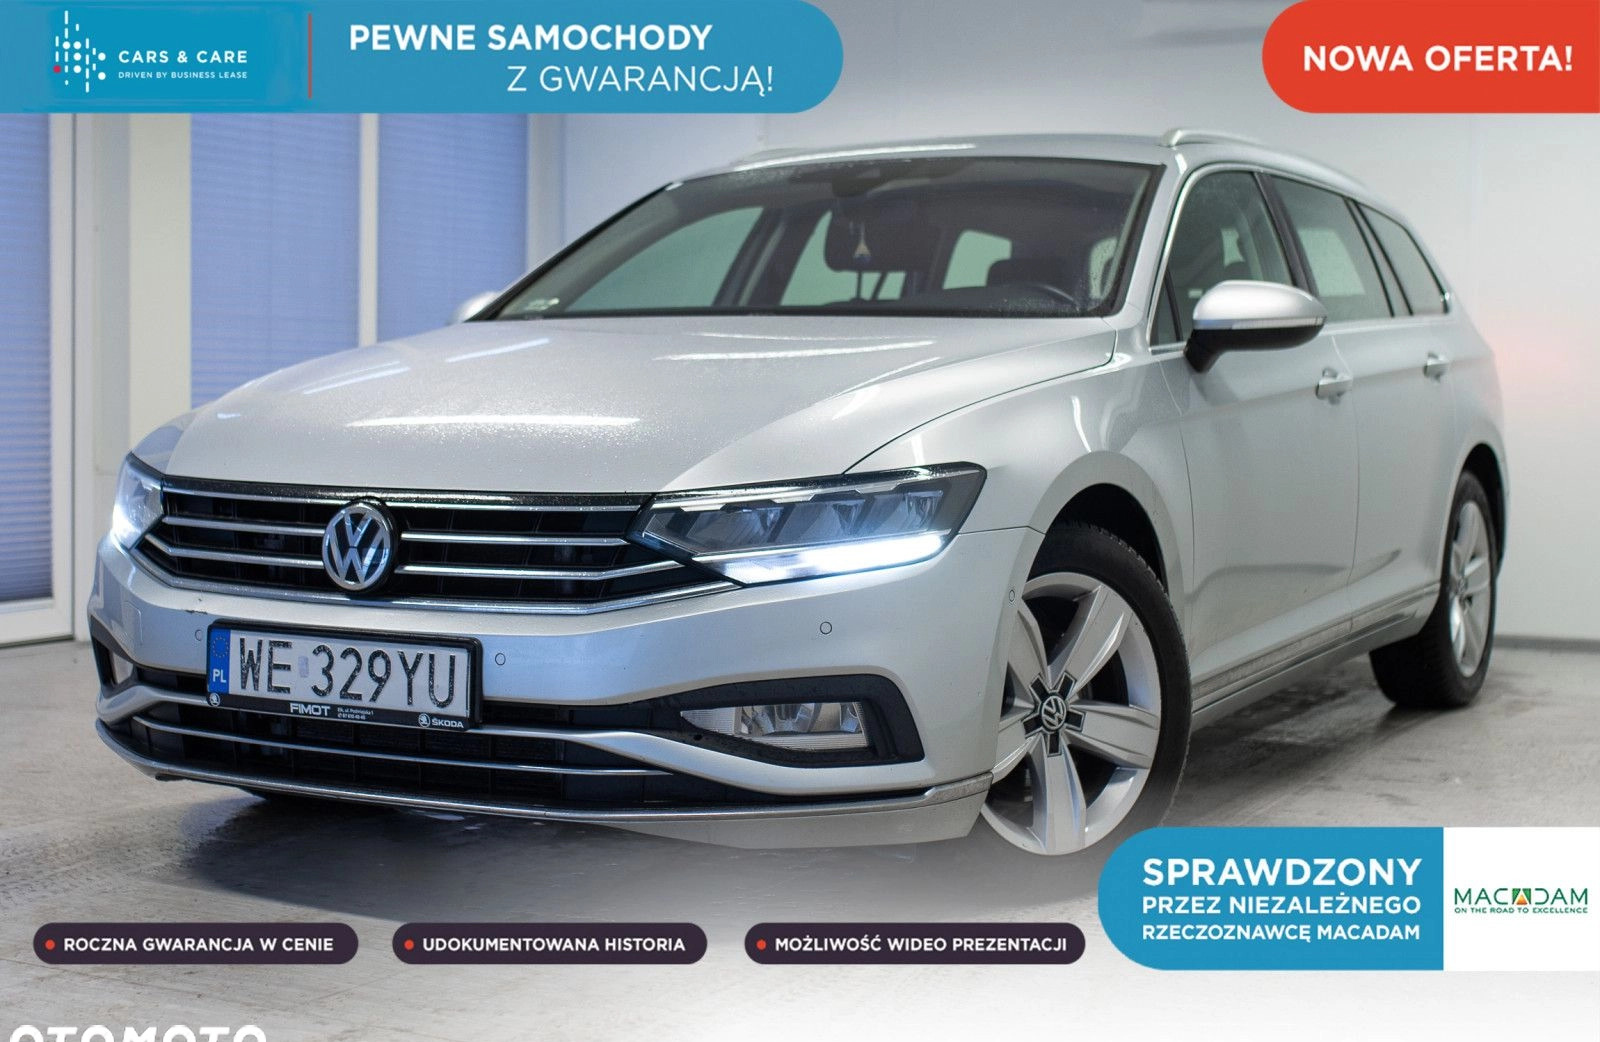 volkswagen Volkswagen Passat cena 107900 przebieg: 157266, rok produkcji 2020 z Prochowice